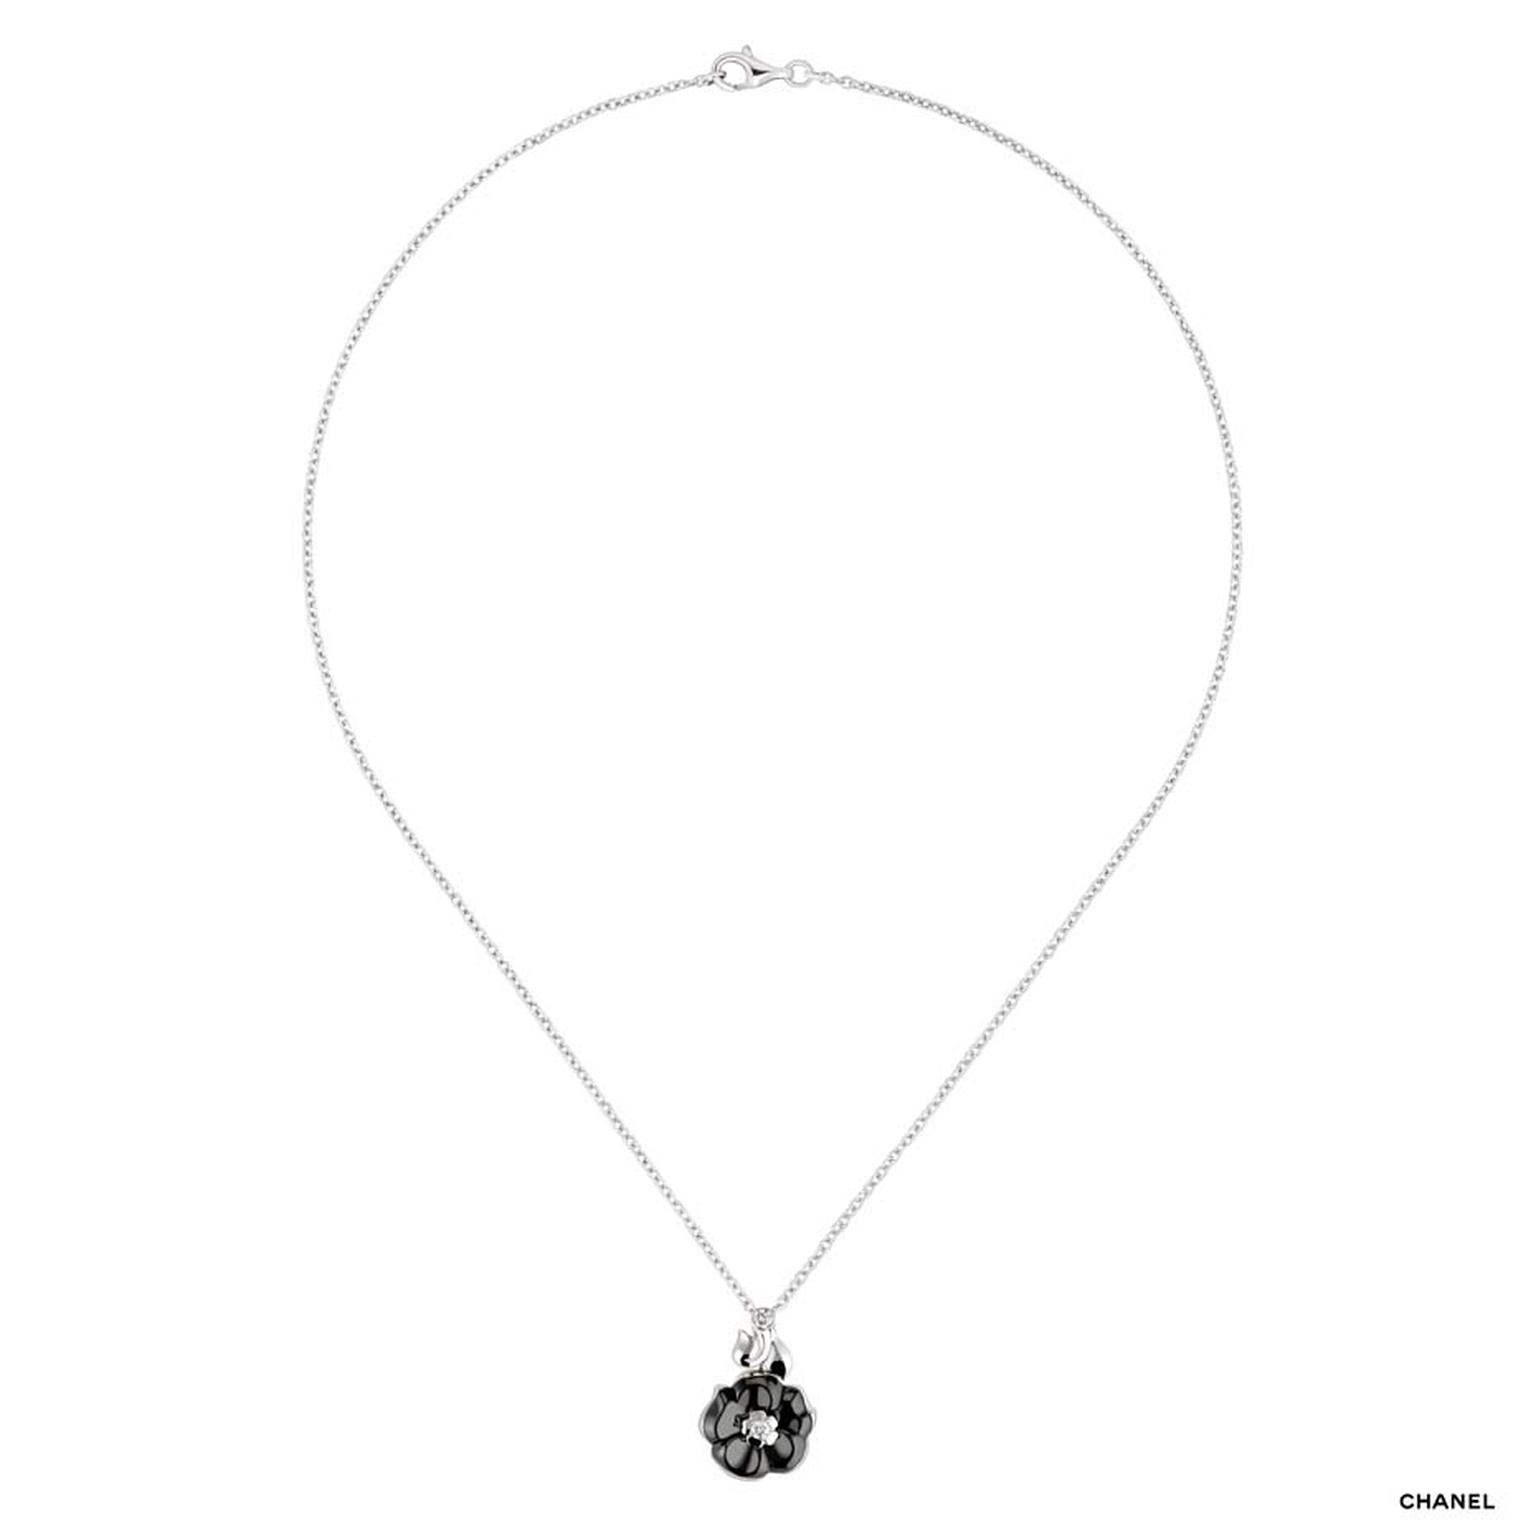 Chanel Camélia Galbé white gold pendant necklace with a black ceramic flower and a single brilliant-cut diamond